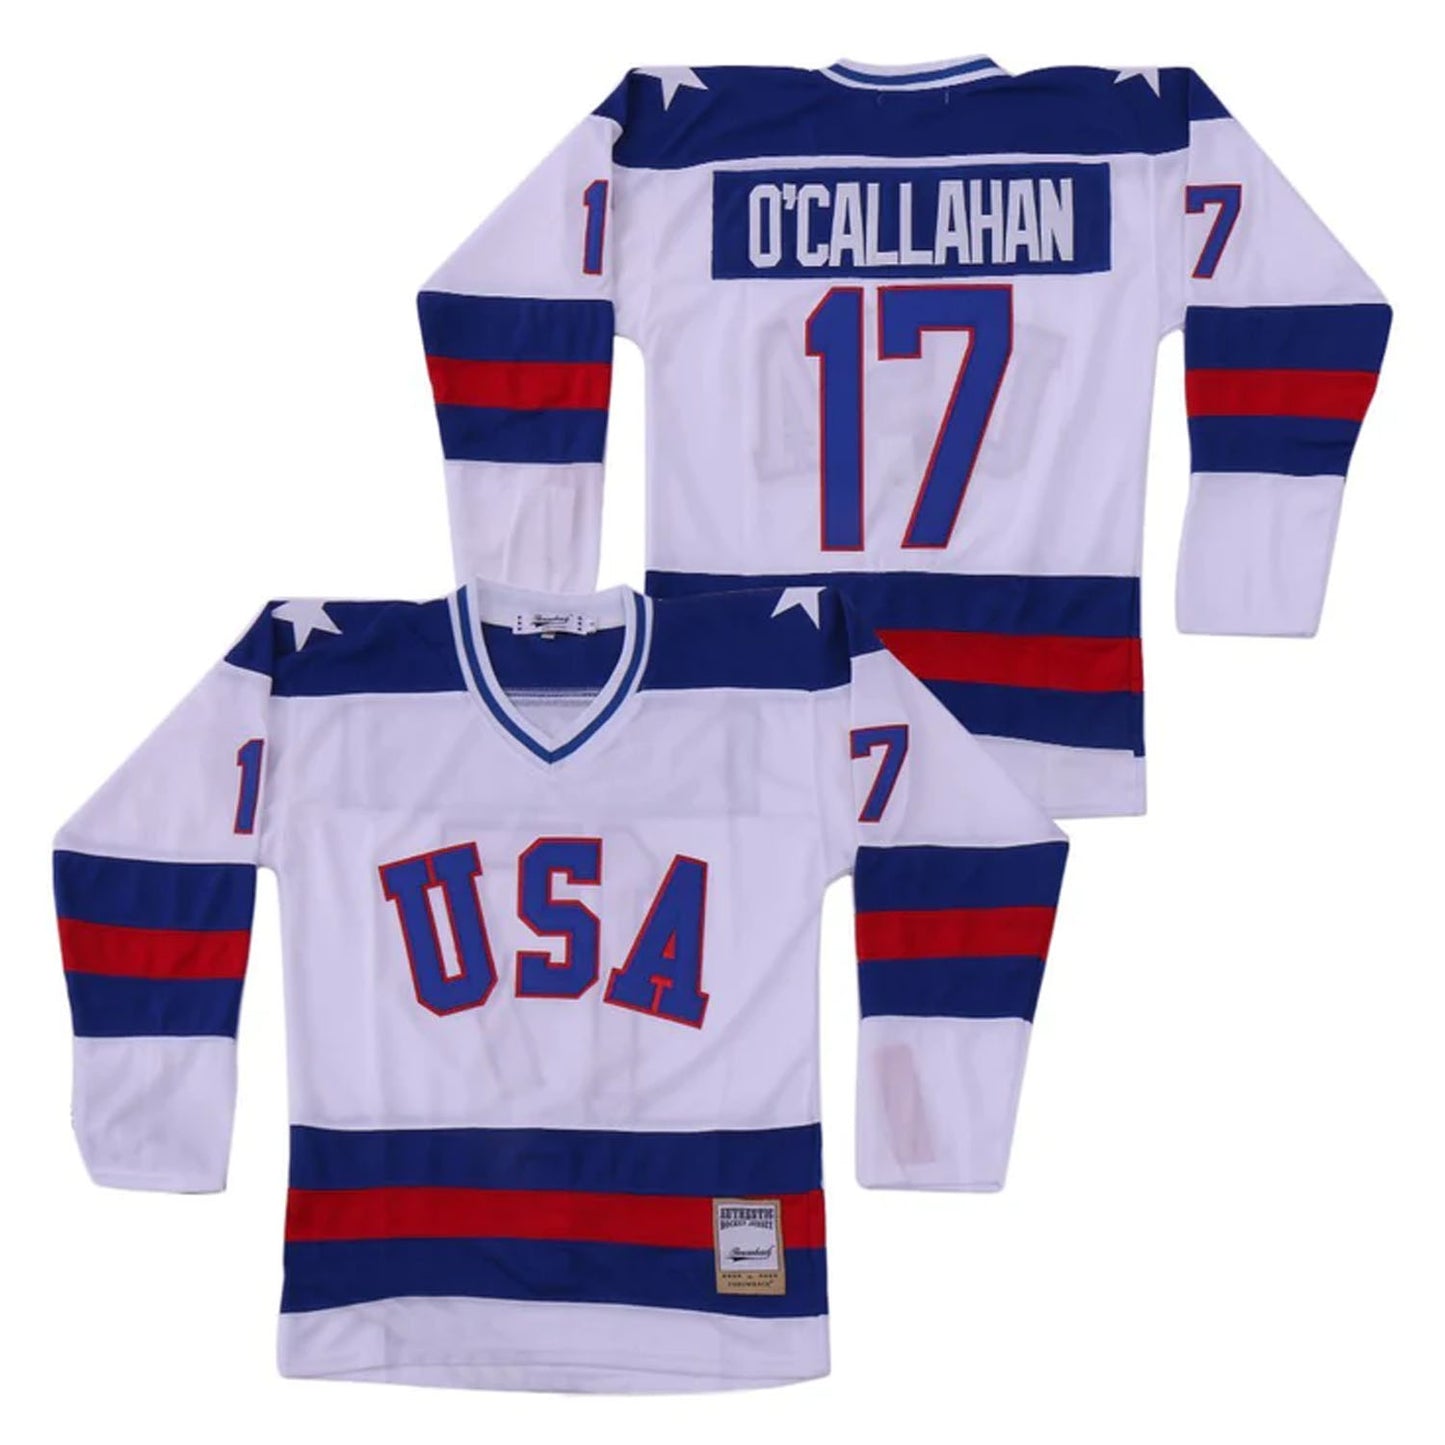 Jack O'Callahan #17 Team USA Miracle On Ice Jersey